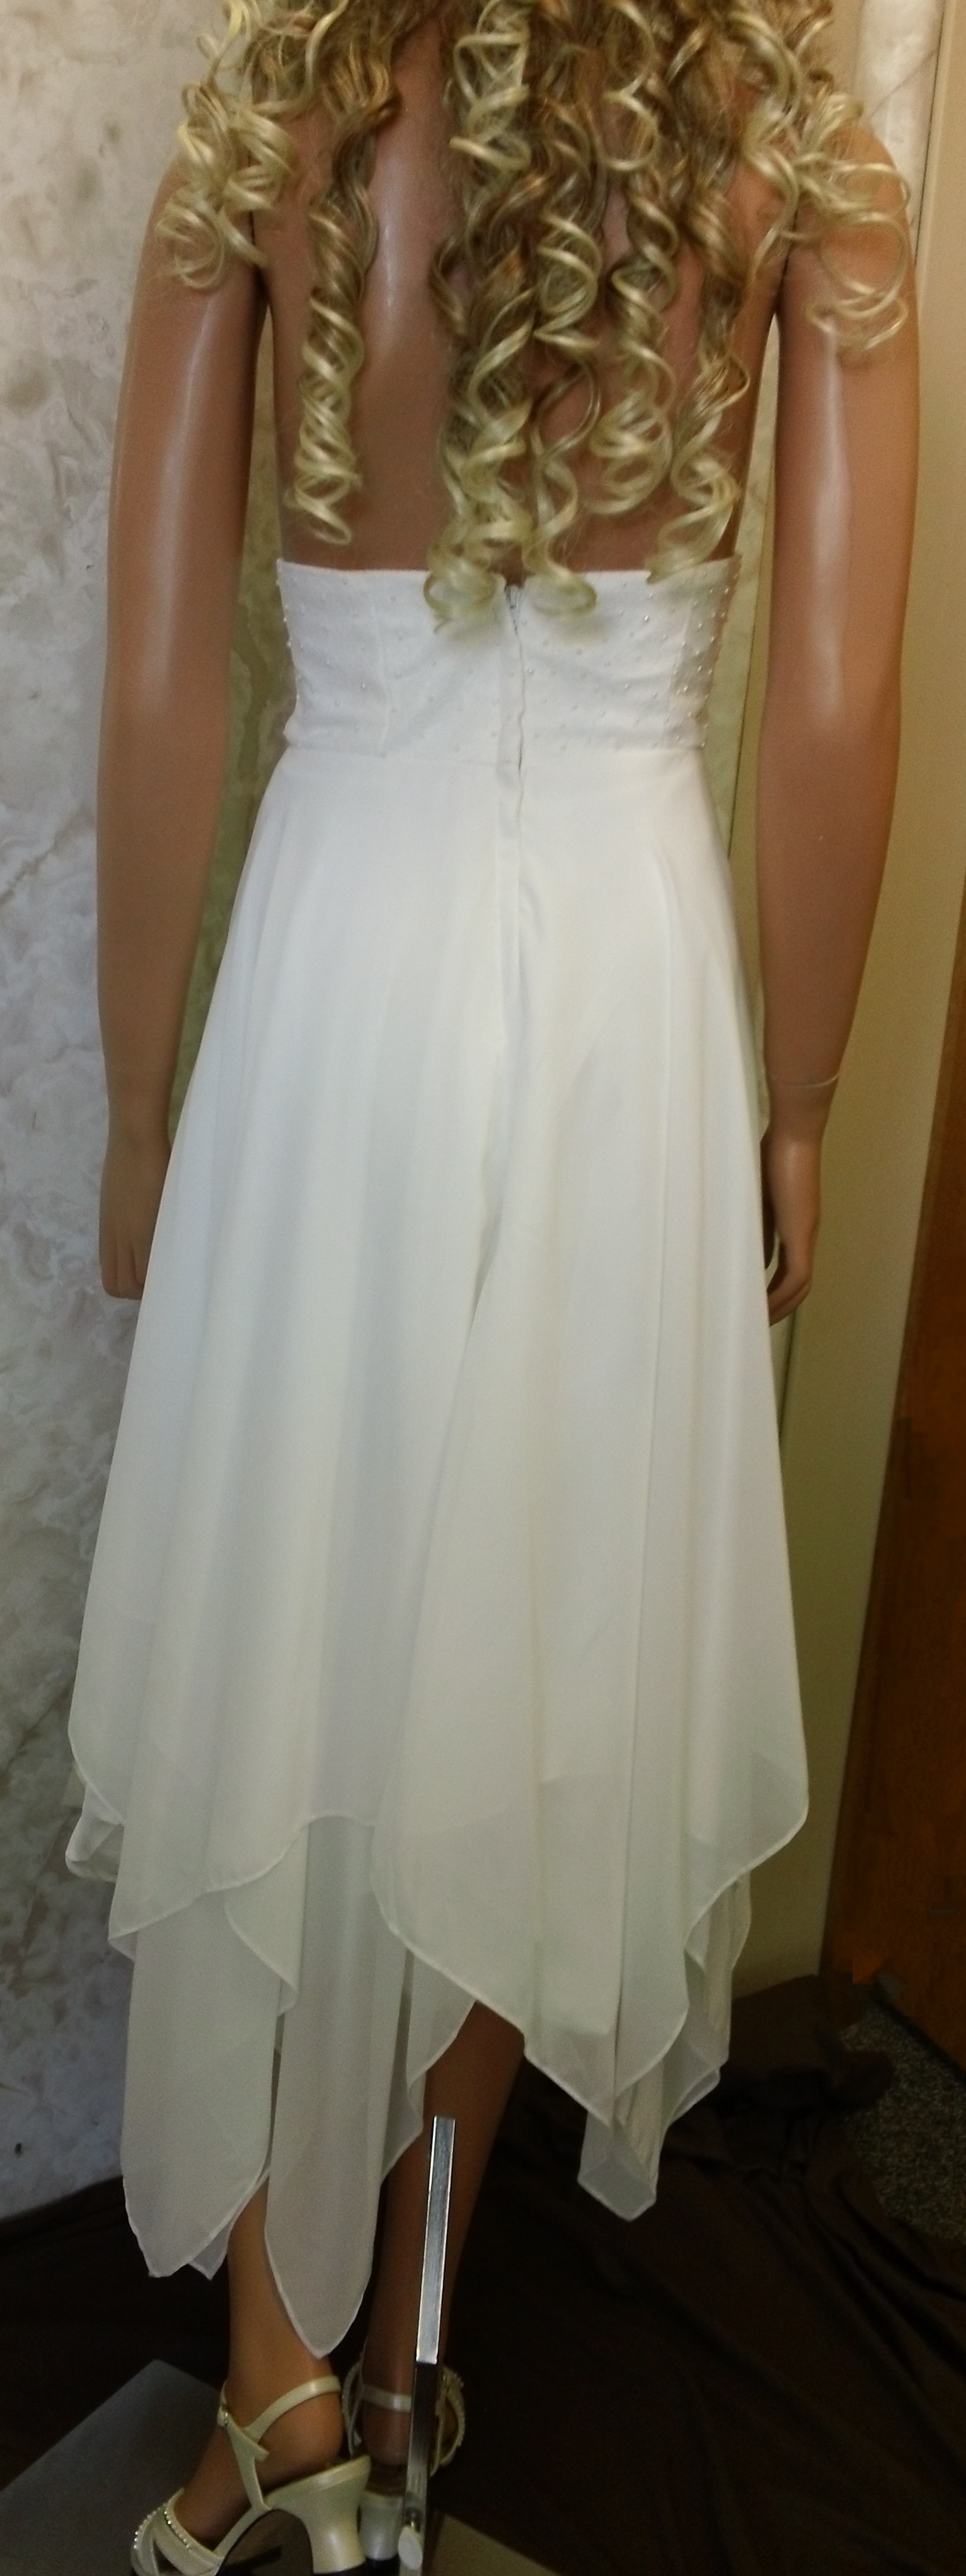 bridal gown with handkerchief hemline